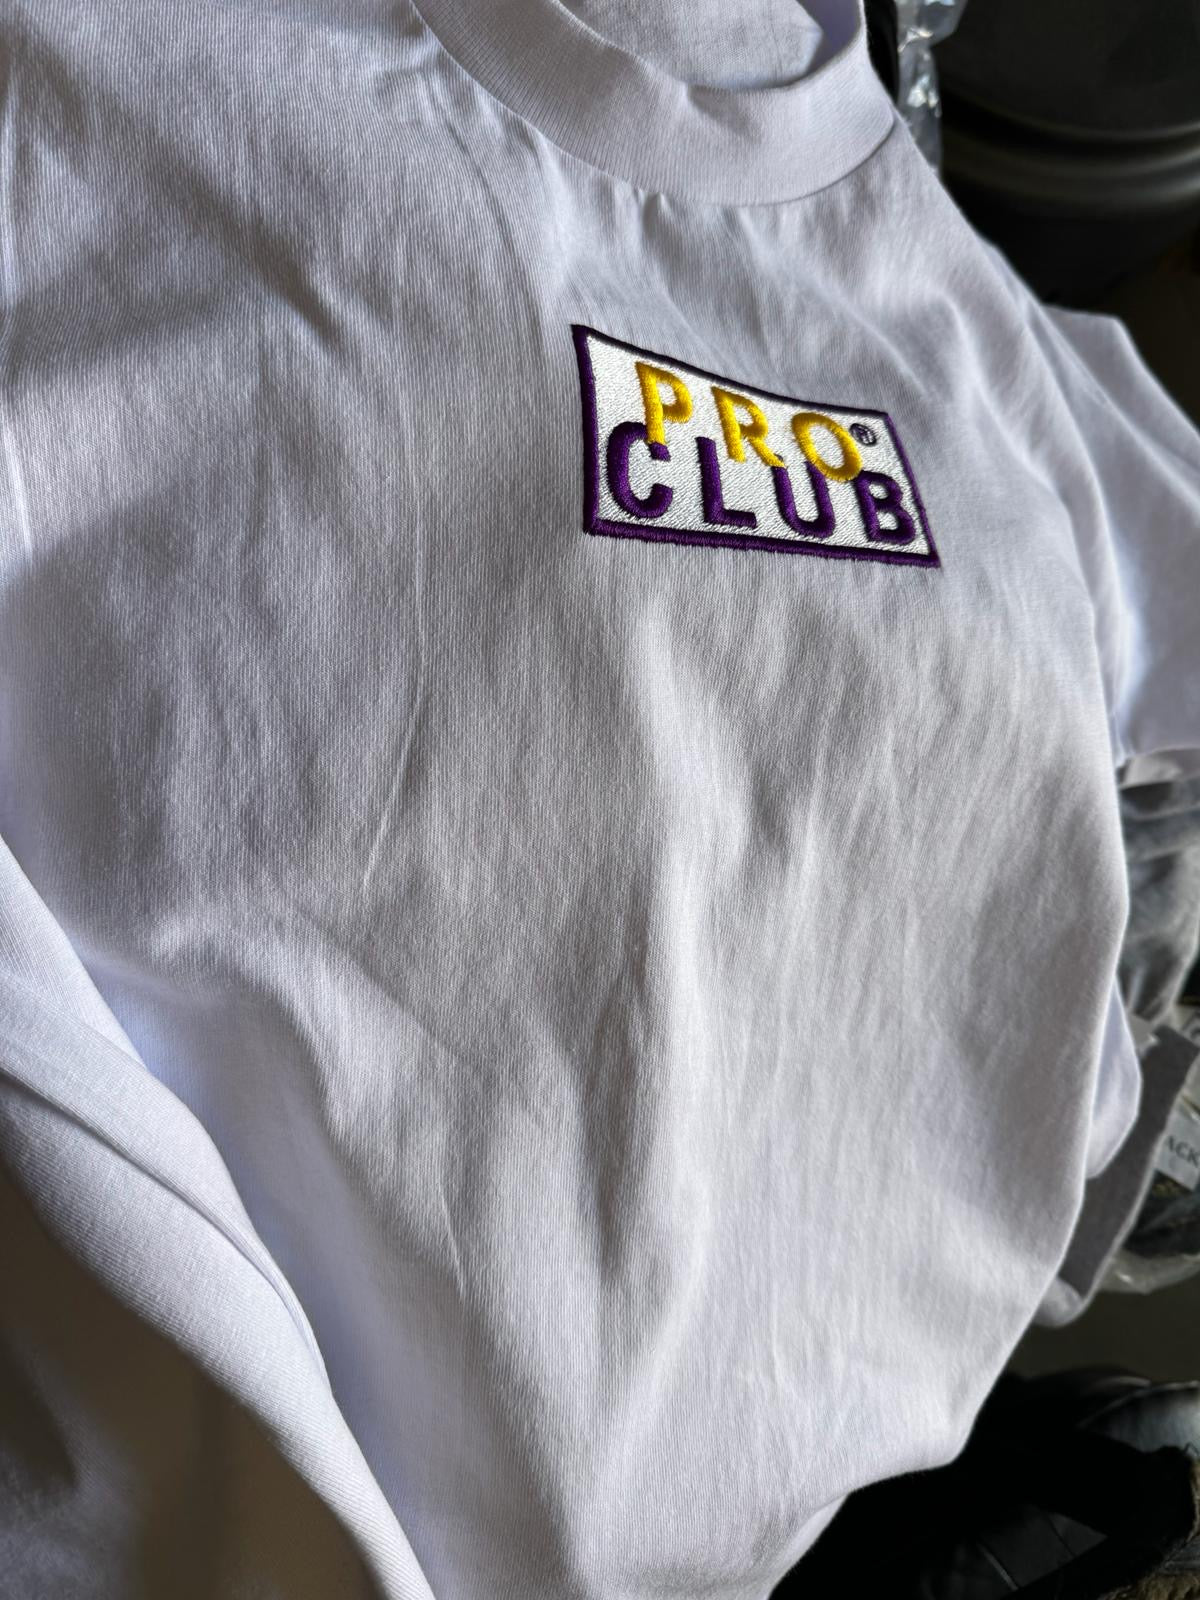 pro club embroidery heavyweight t shirt box logo yellow and purple